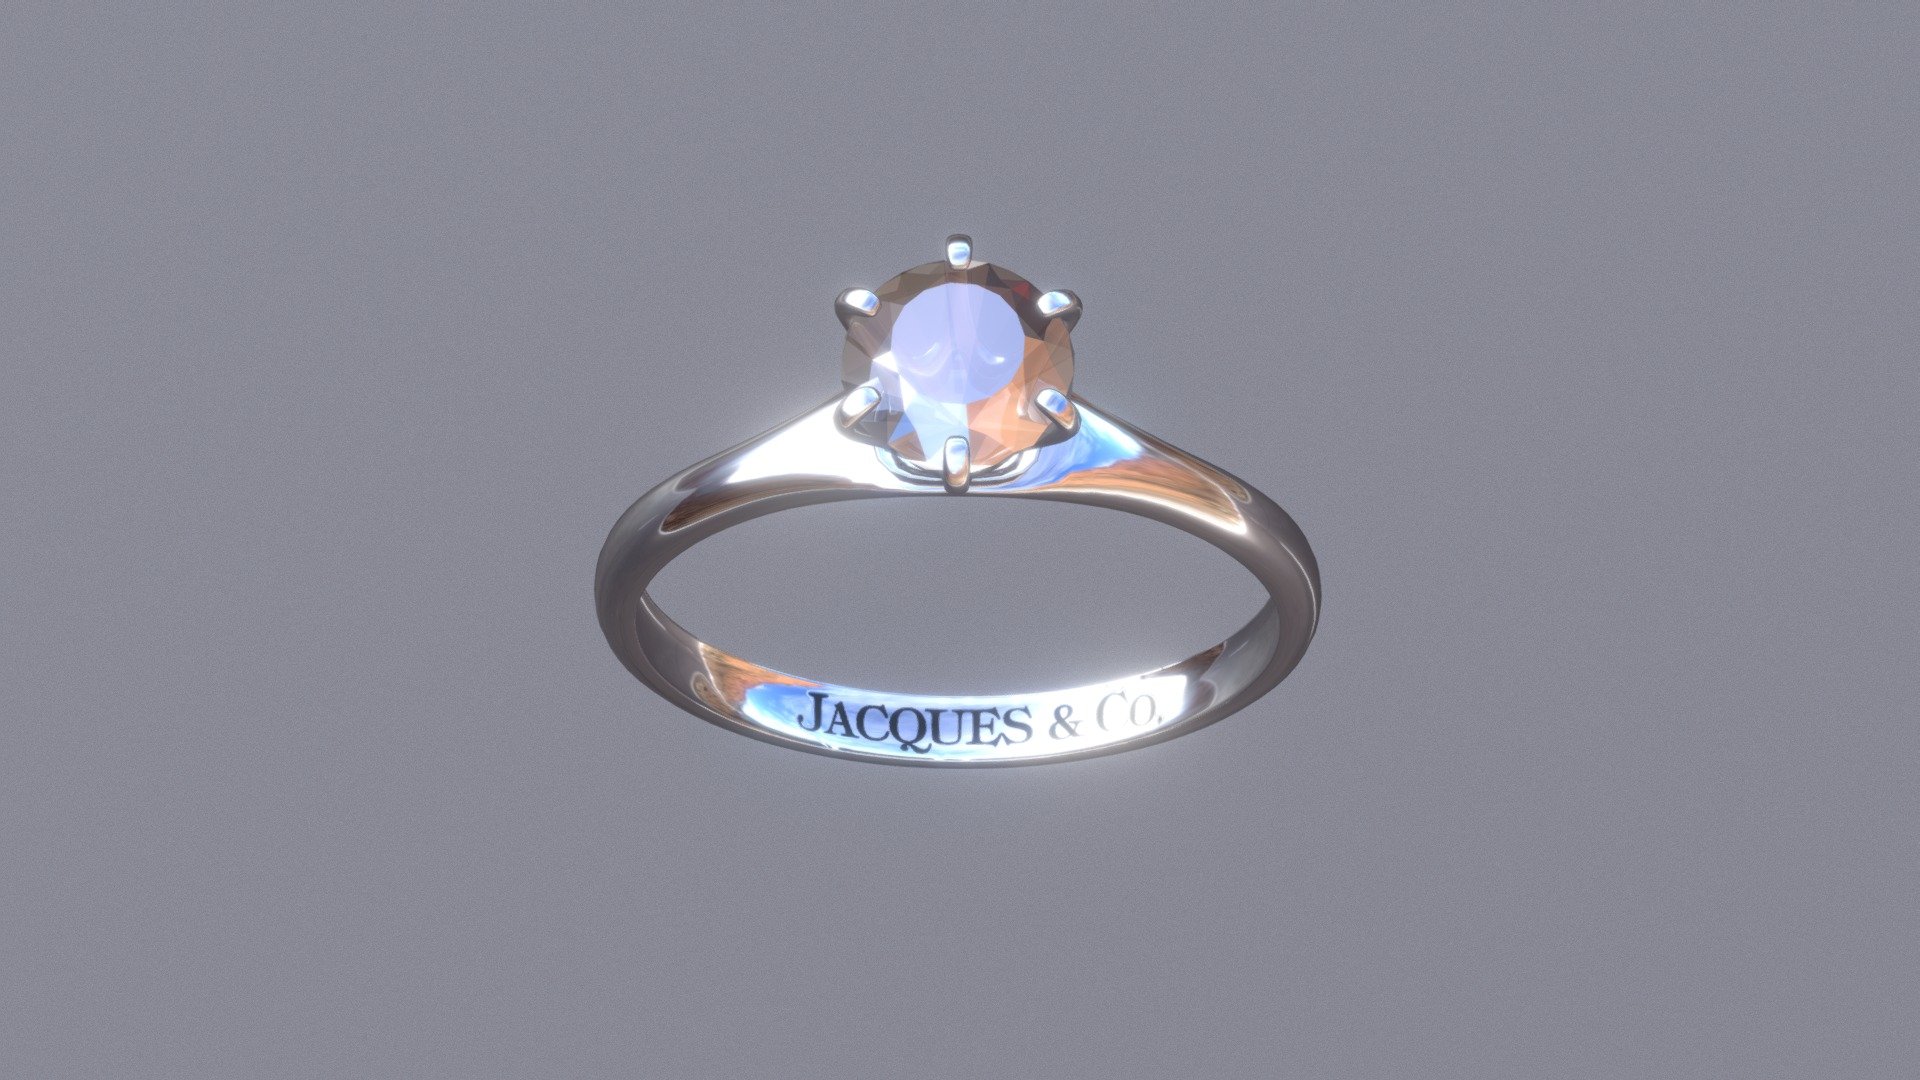 2018.04.22 Classic Tiffany Diamond Ring /
Original design credits to Tiffany &amp; Co. /
Starting from this simple model, I'm going to make some more awesome jewelry lol /
link: https://skfb.ly/6yvTN - Classic Tiffany Six-Prong Diamond Ring - 3D model by Kugatsu Tsukai 3D Model Hub (@KugatsuT) 3d model